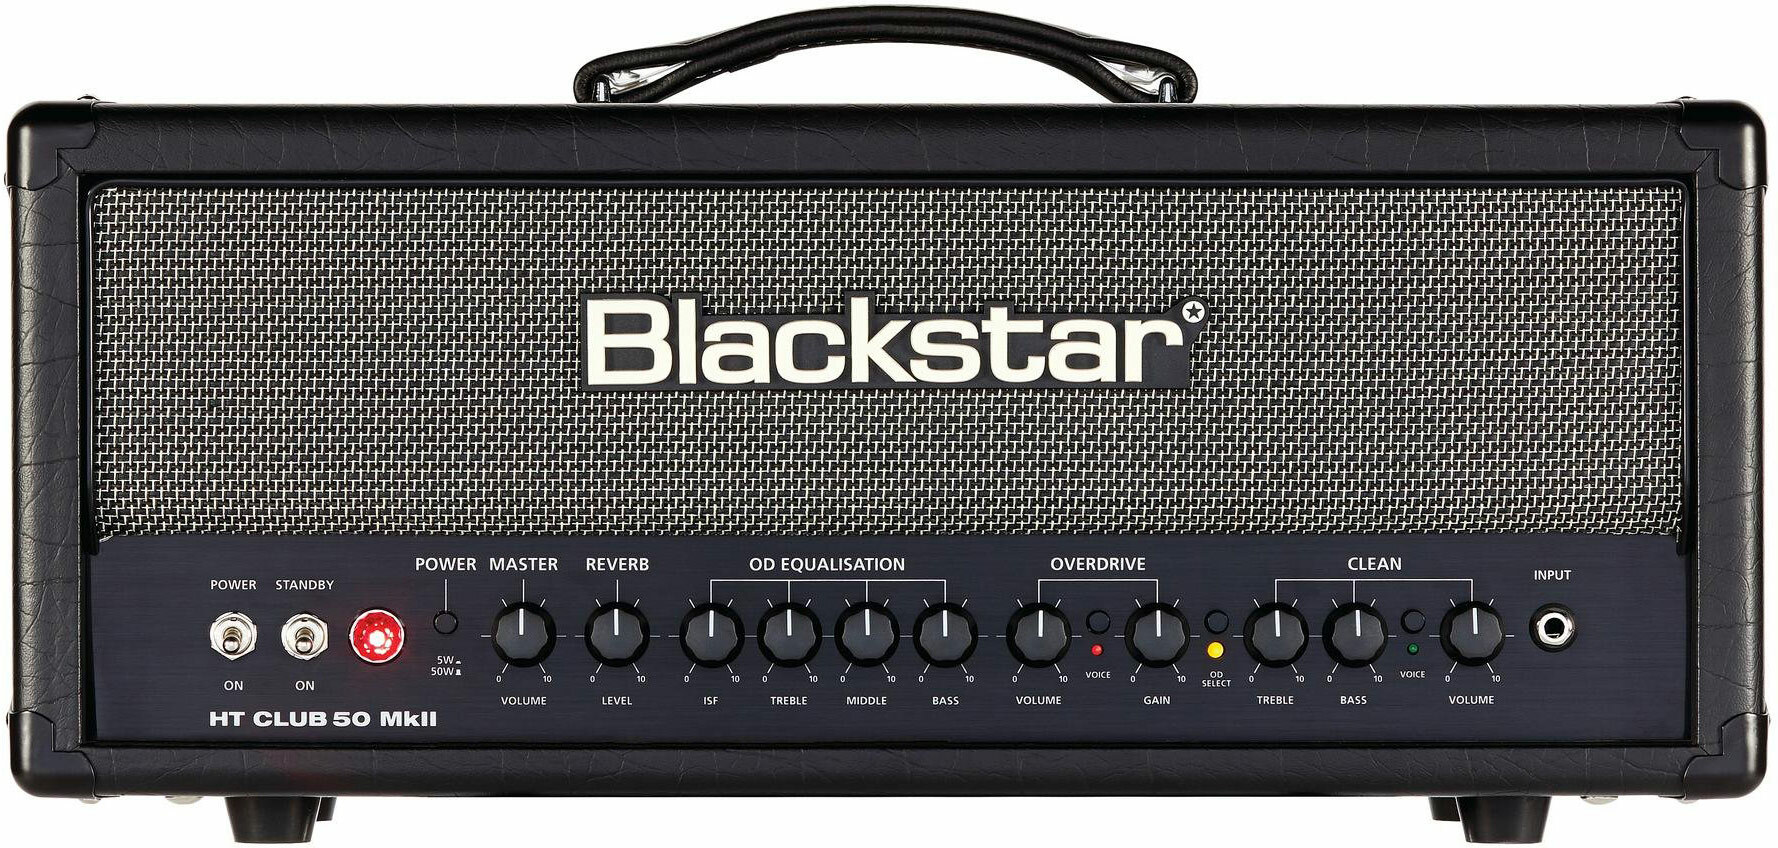 Blackstar Ht Club 50 Mkii - Electric guitar amp head - Main picture